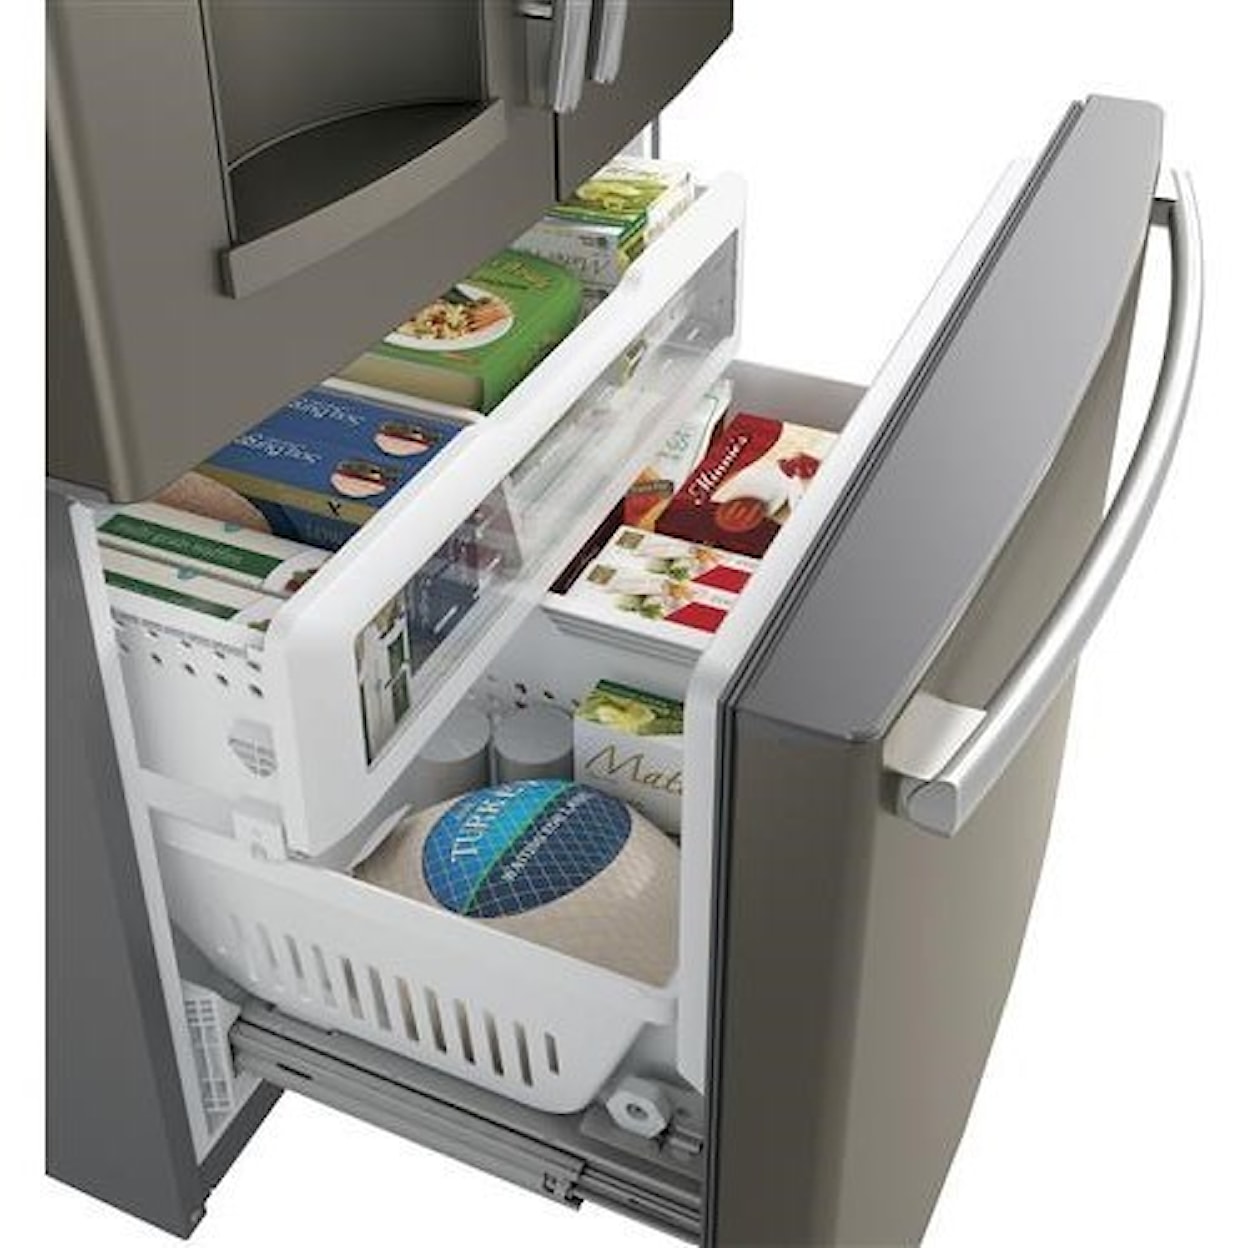 GE Appliances GE French Door Refrigerators  ENERGY STAR® 27.8 Cu. Ft. Refrigerator